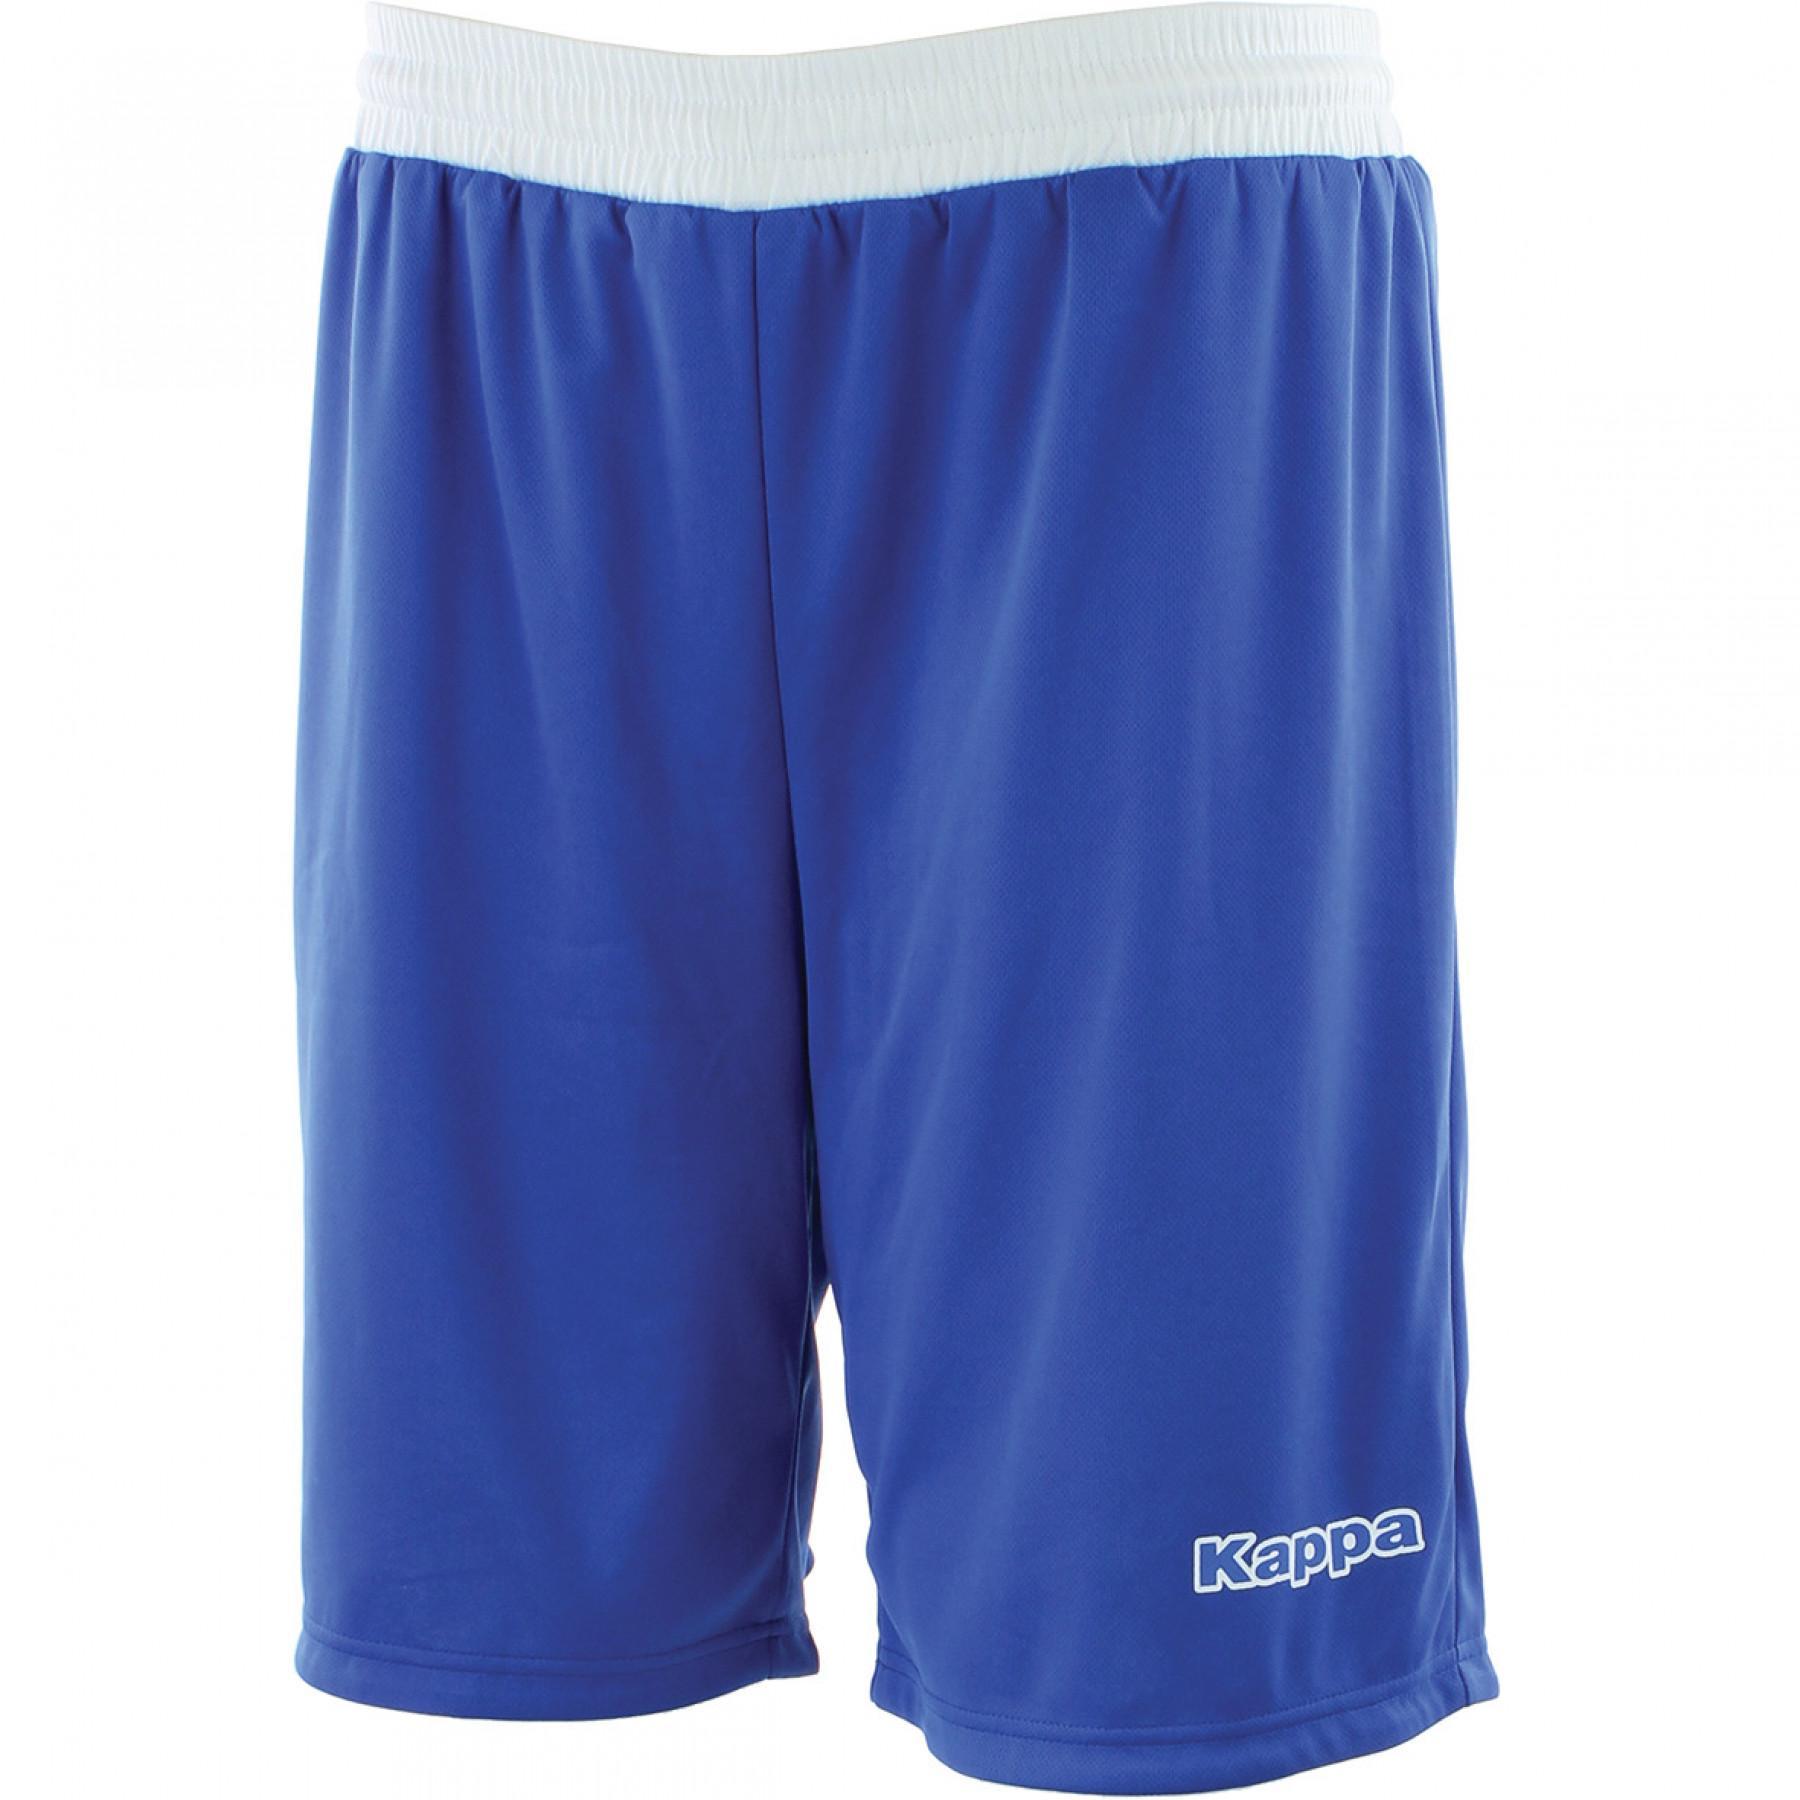 Reversible basketball shorts for kids Kappa Ponazzi